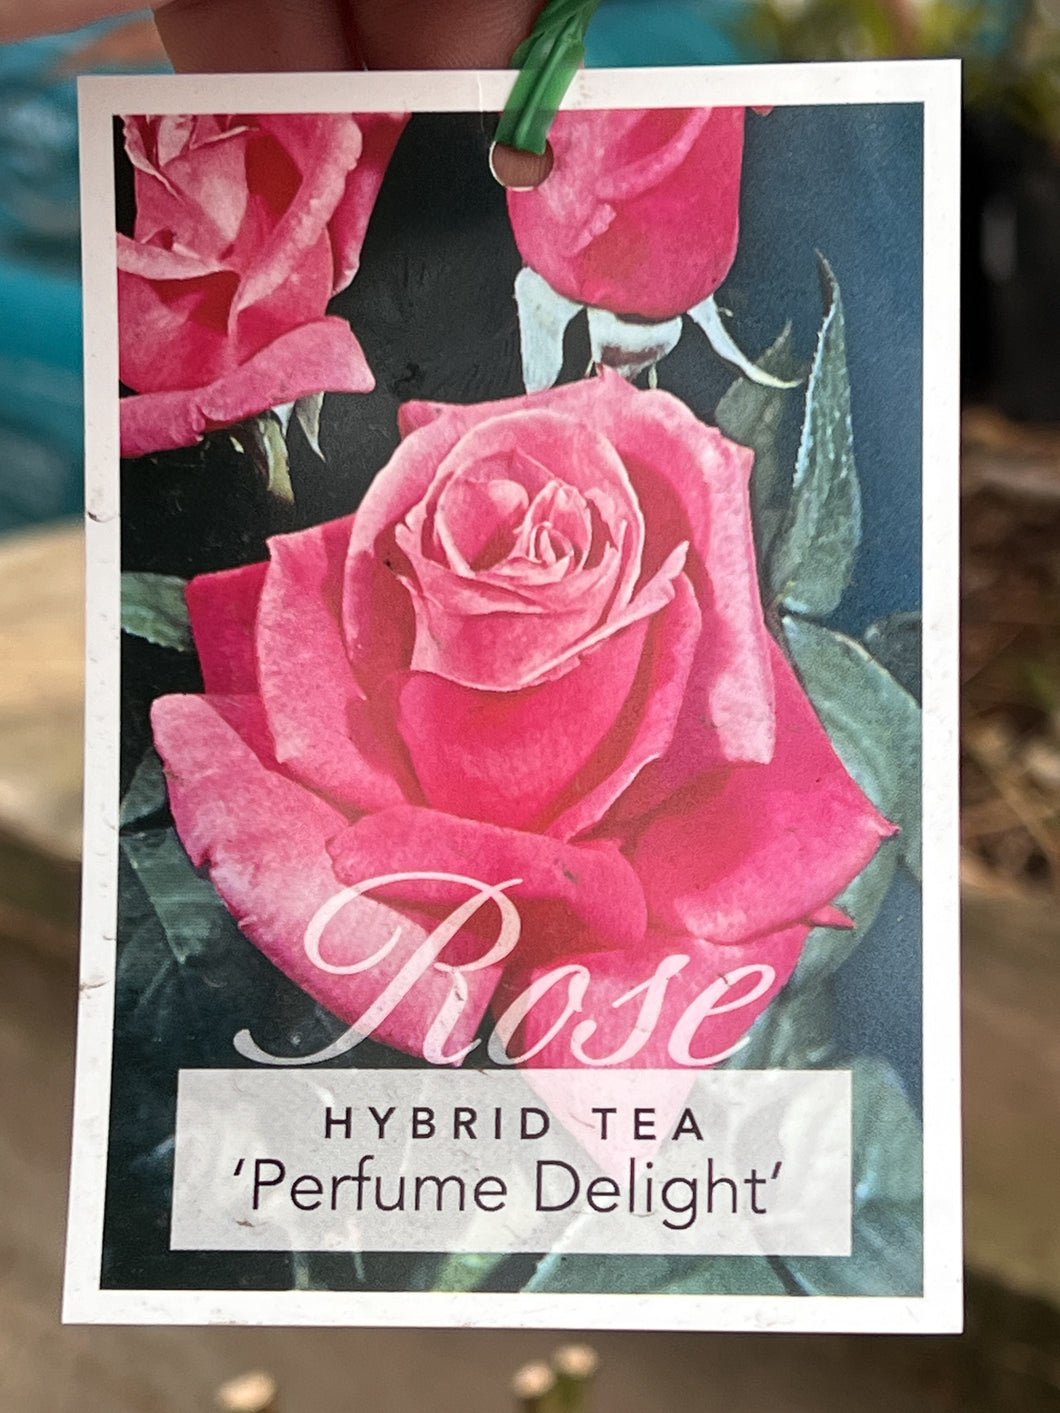 Rose - Hybrid Tea 'Perfume Delight'